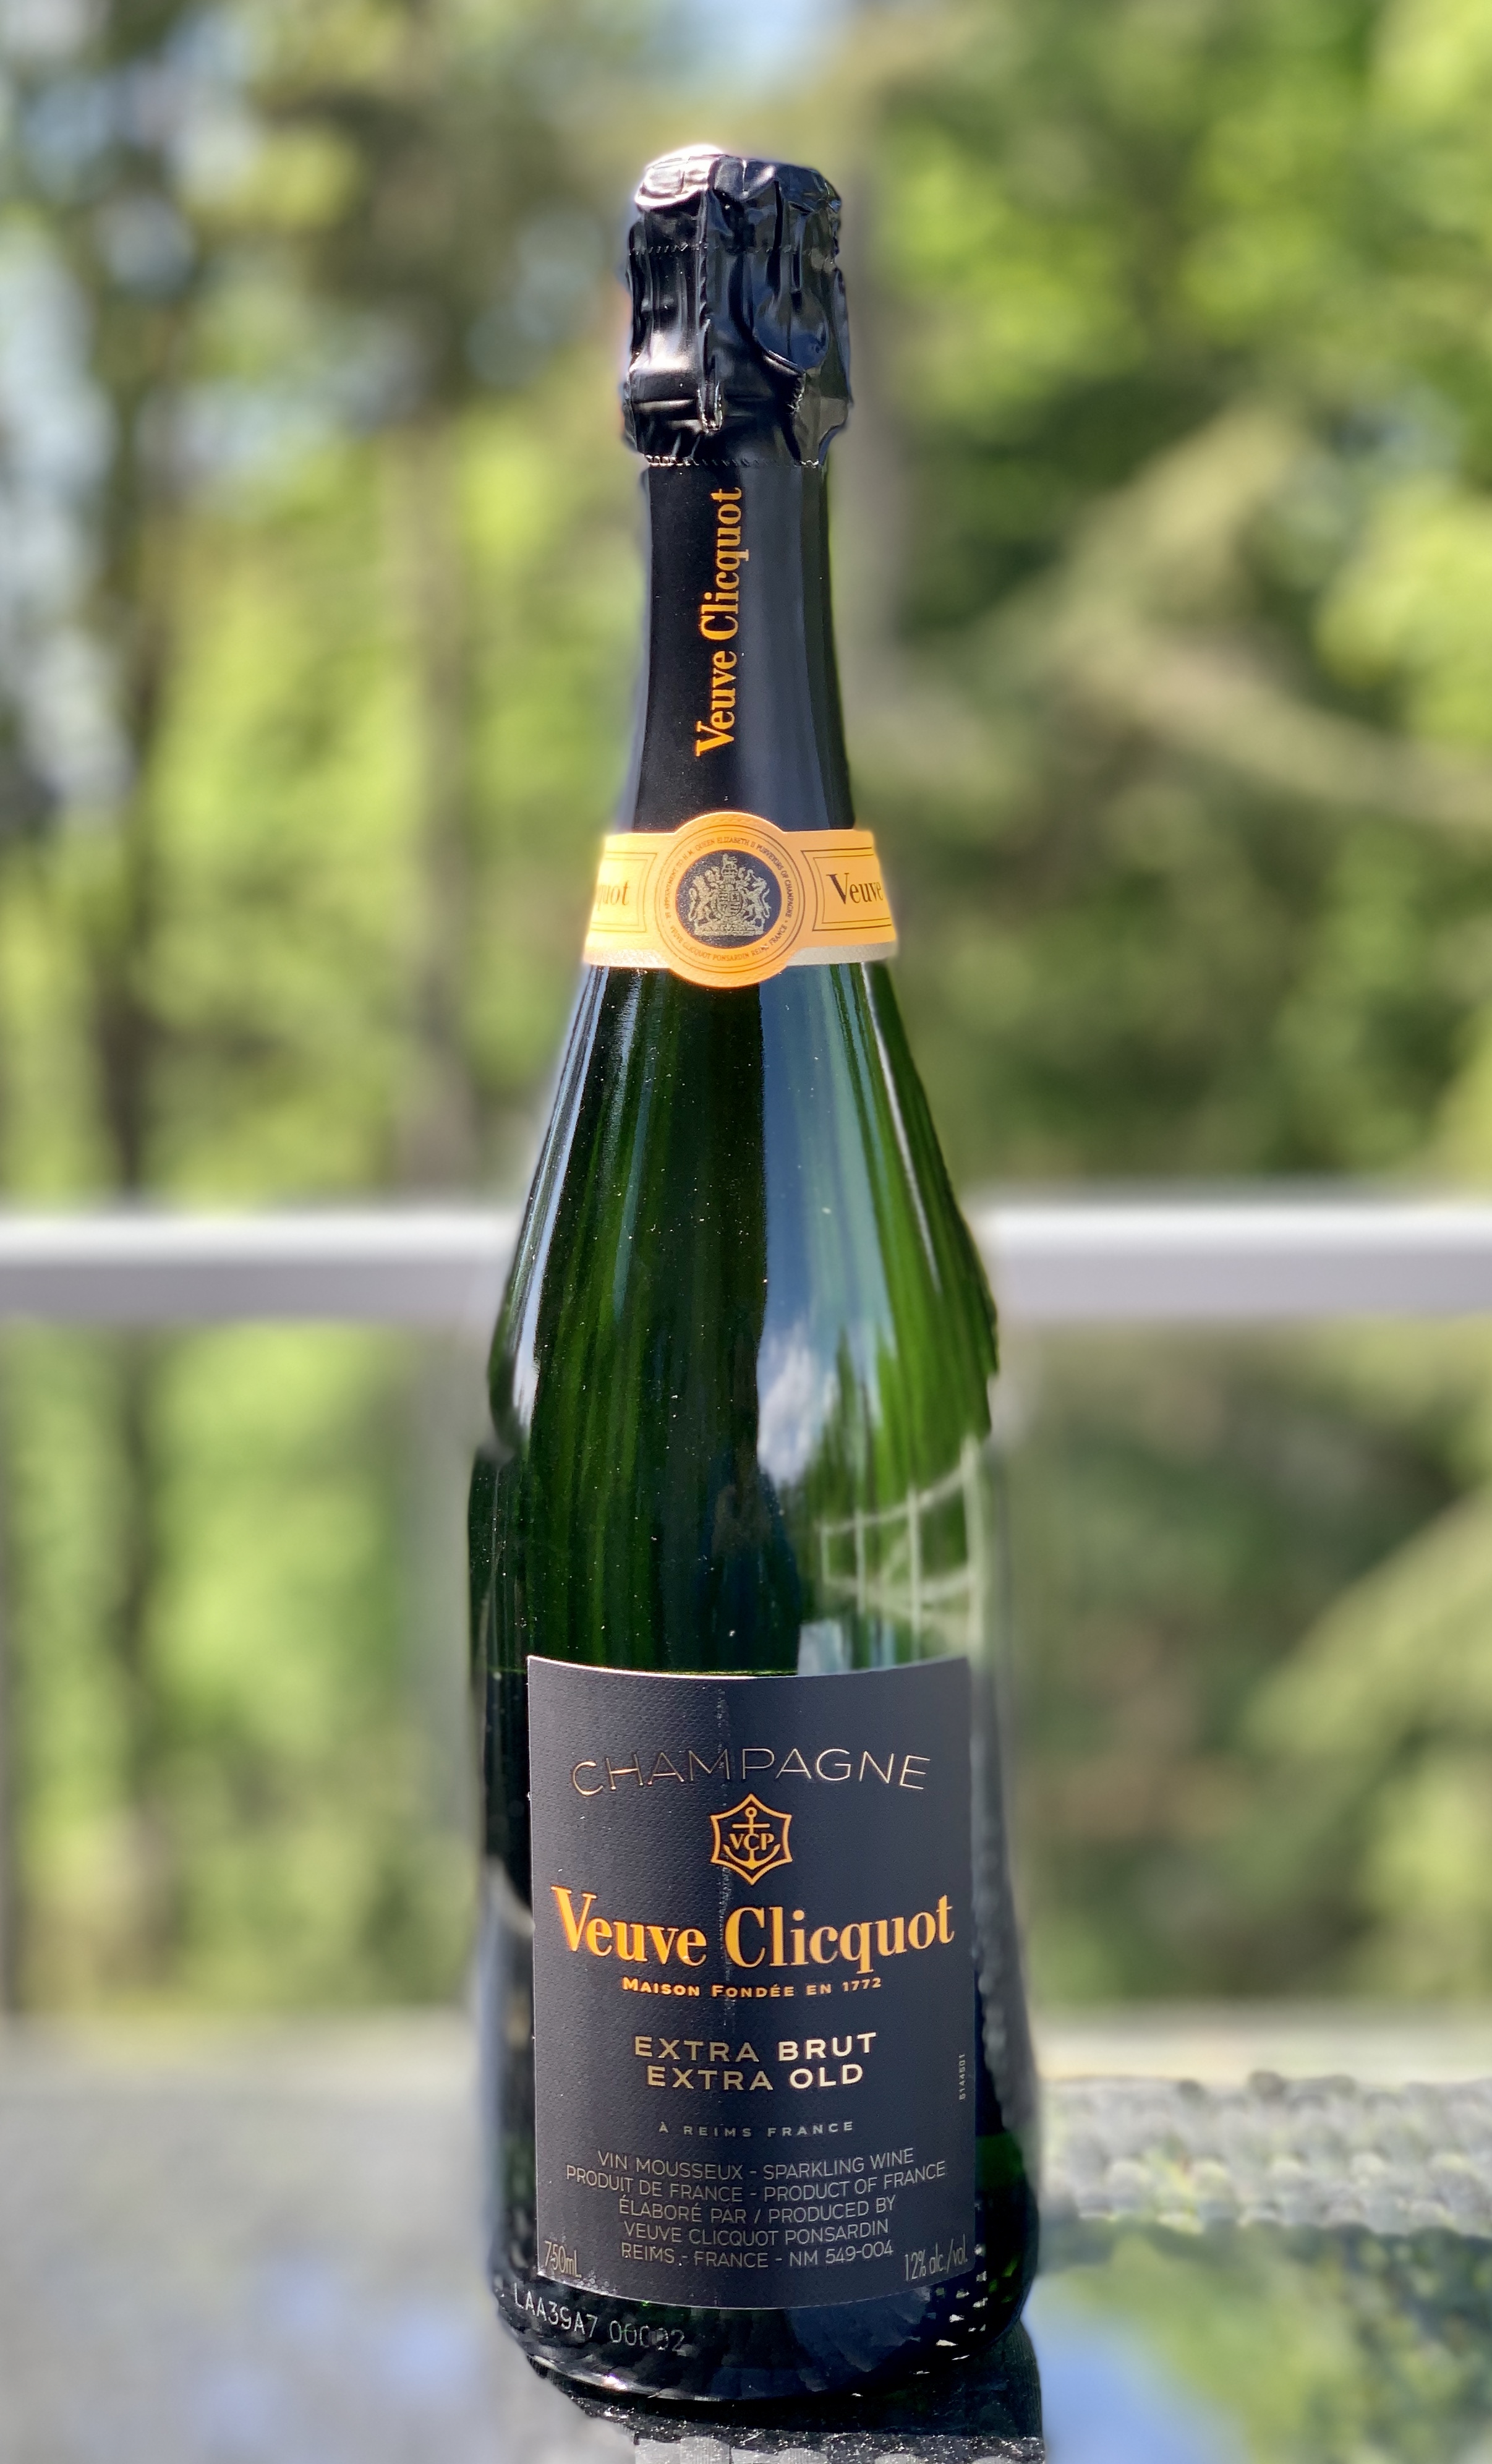 Veuve Clicquot Ponsardin Champagne, Brut, France, 1772 - 3 lt